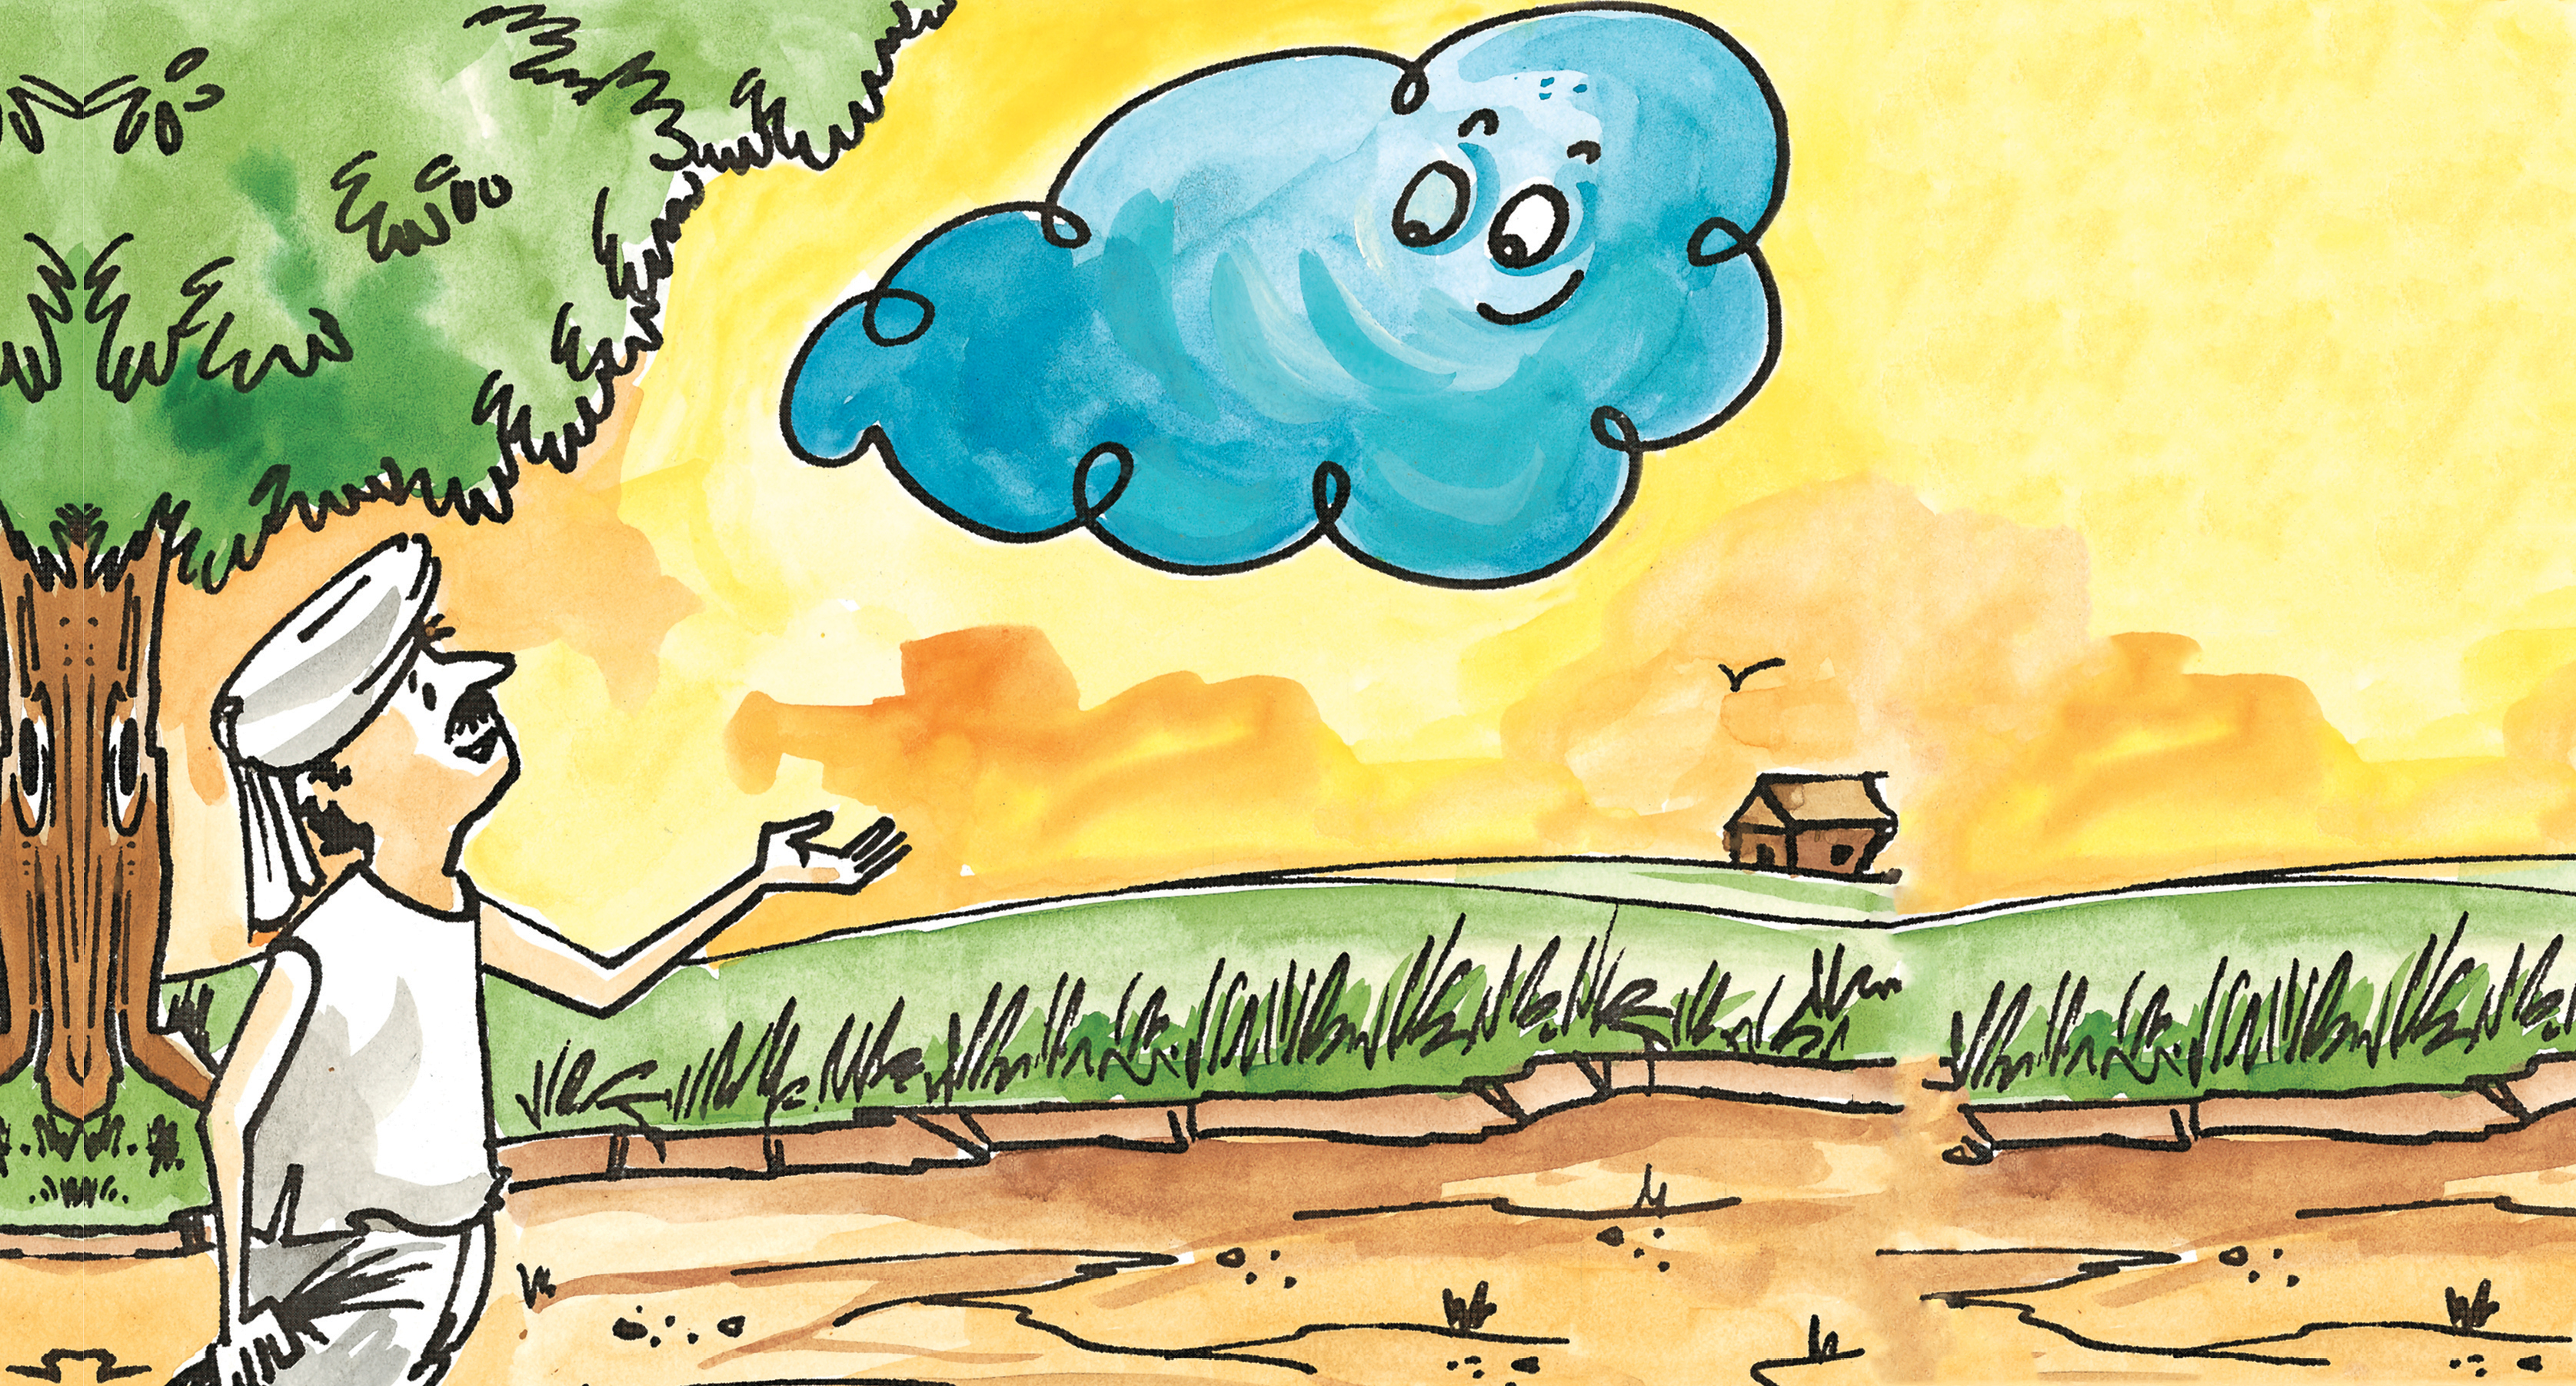 Farmer gazing at the cloud in the sky - StoryWeaver